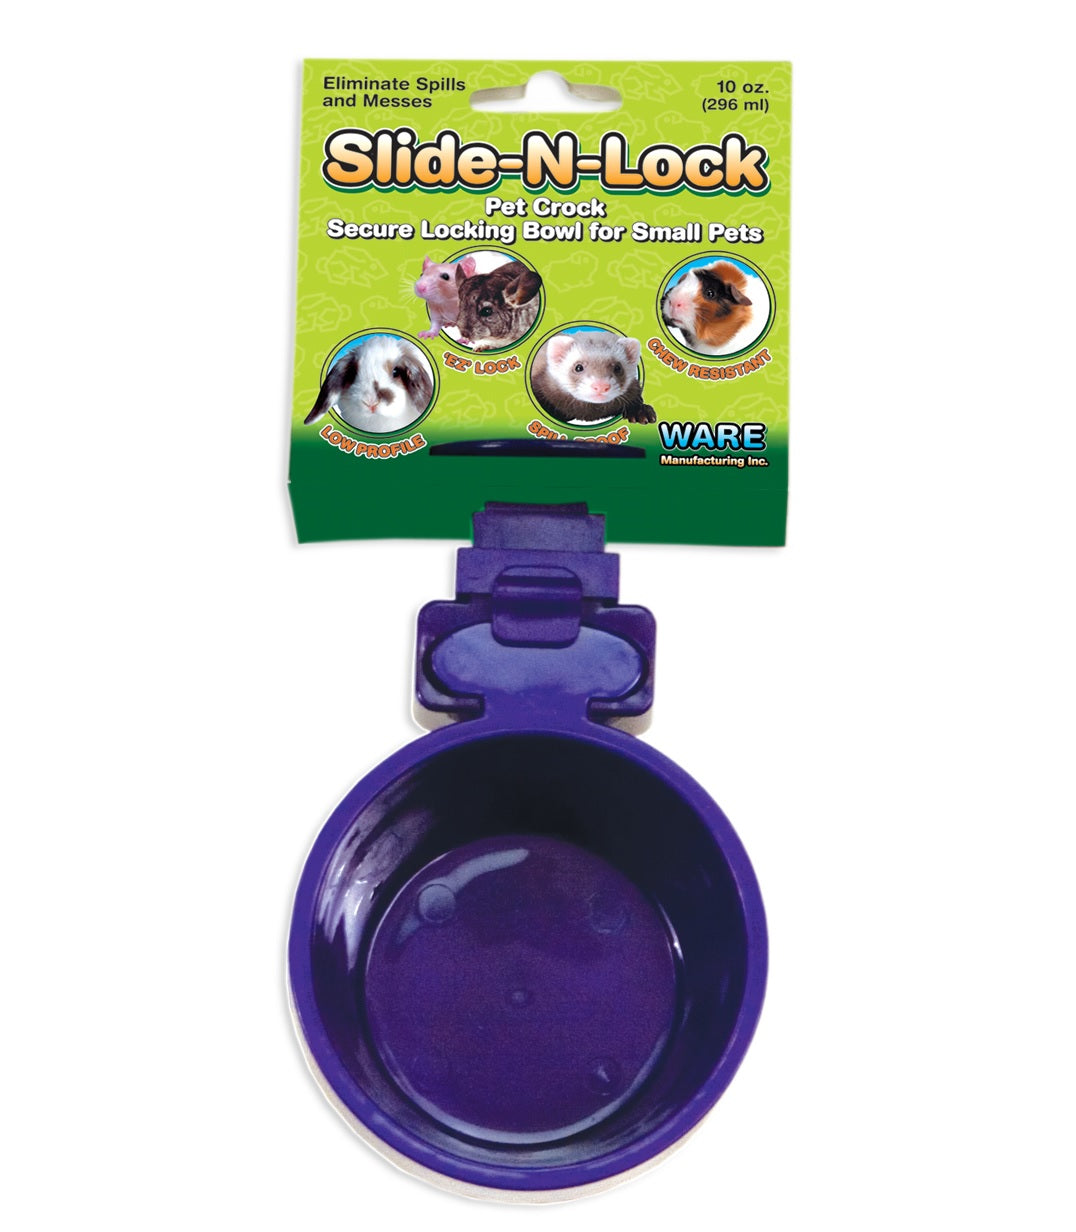 Ware Manufacturing 03301 Slide-N-Lock Pet Crock, 10 Ounce